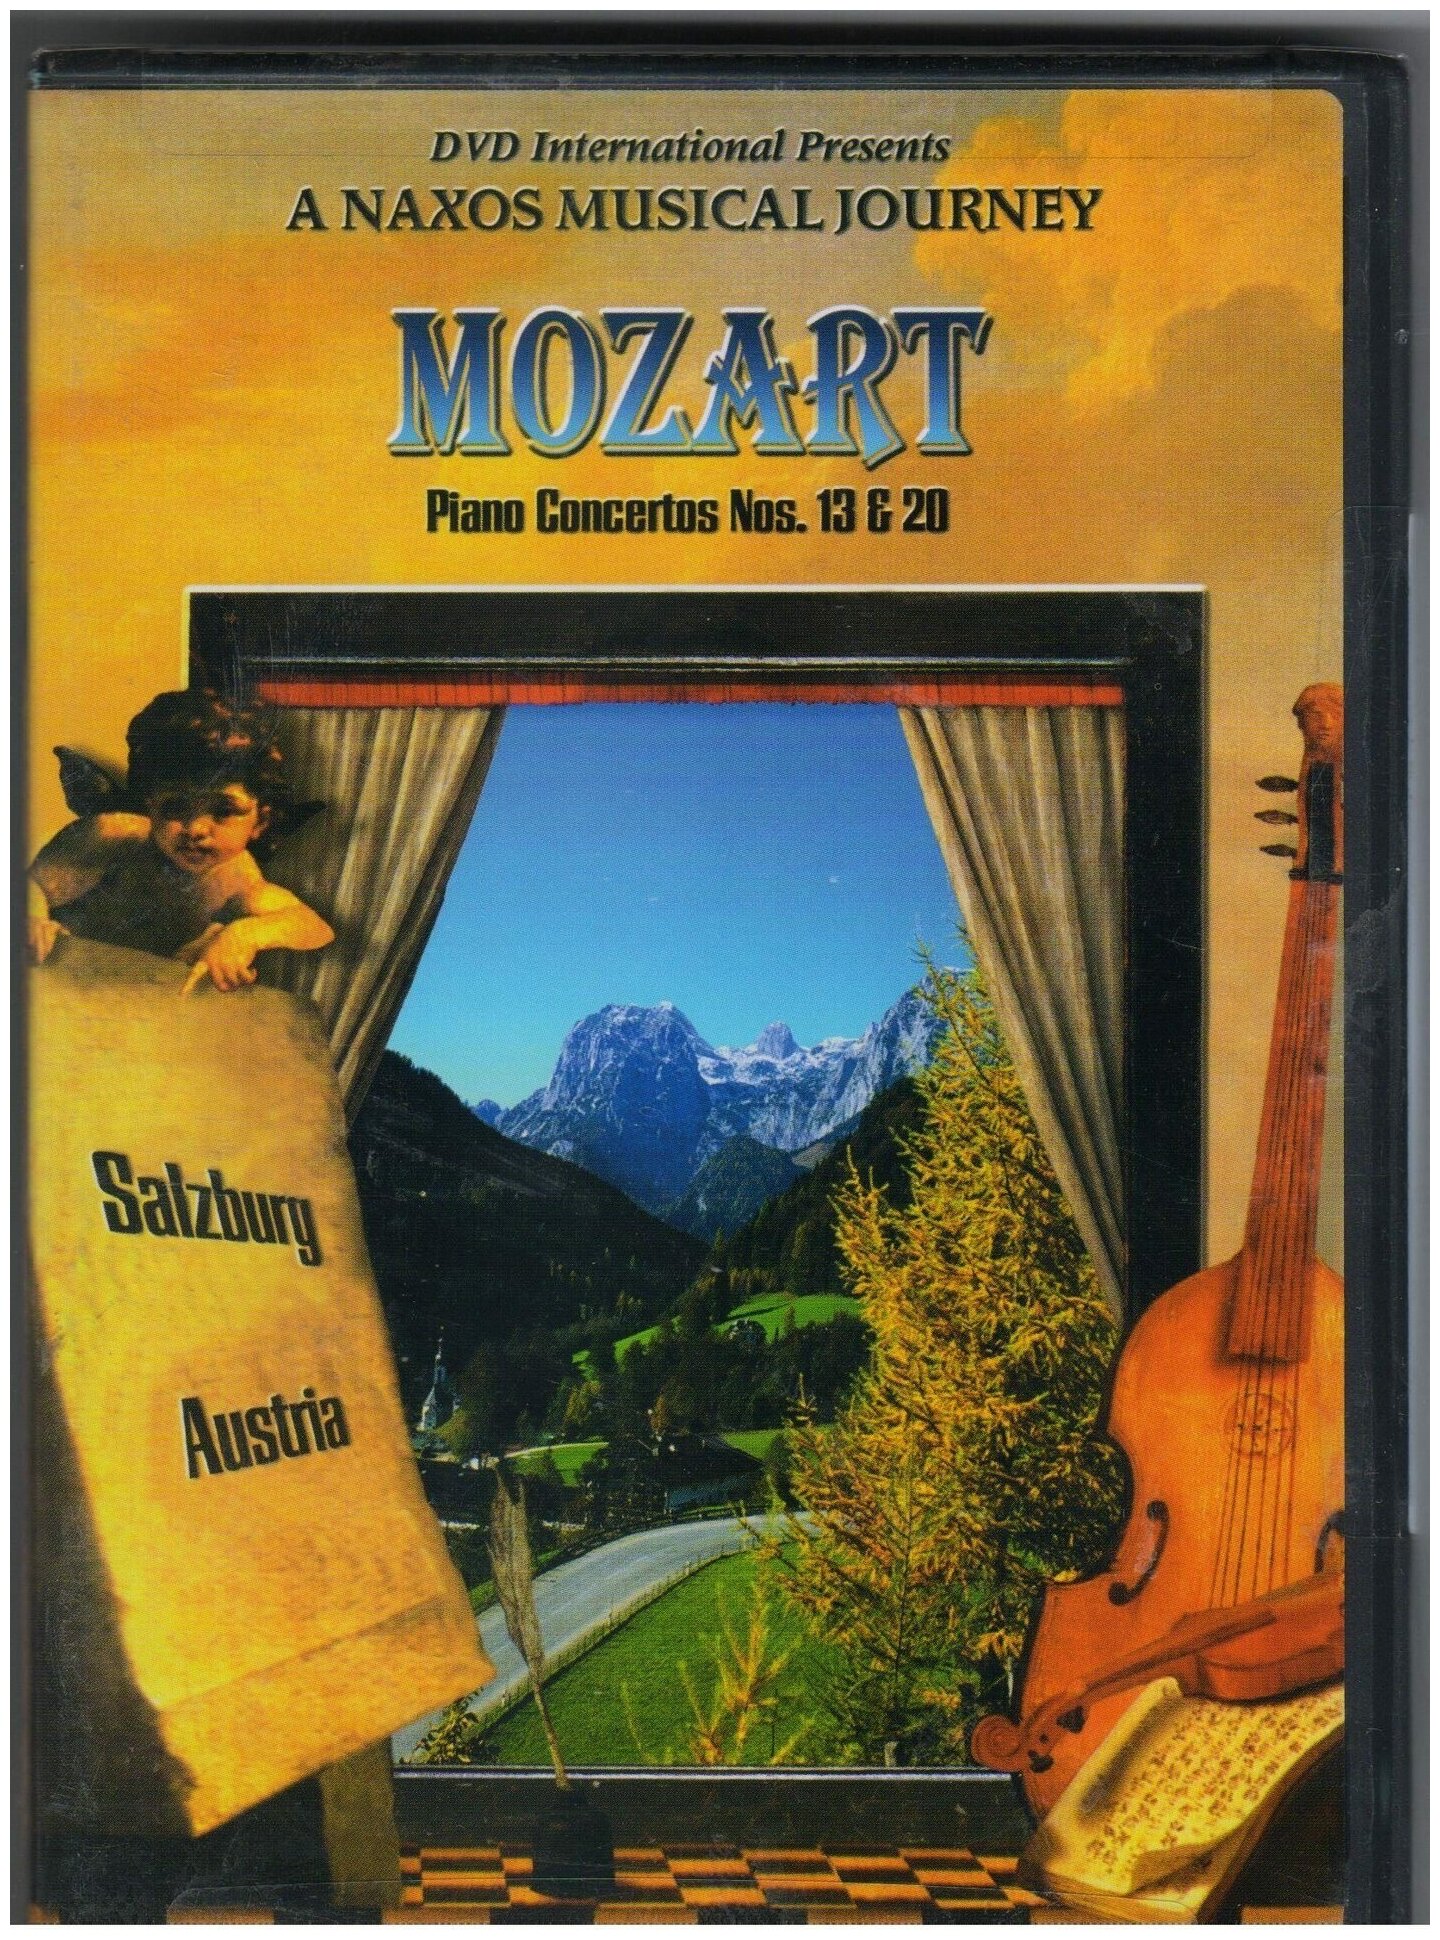 Mozart - Piano Concertos 13 20-Musical Journey - Scenes Of Salzburg Naxos DVD Deu ( ДВД Видео 1шт)